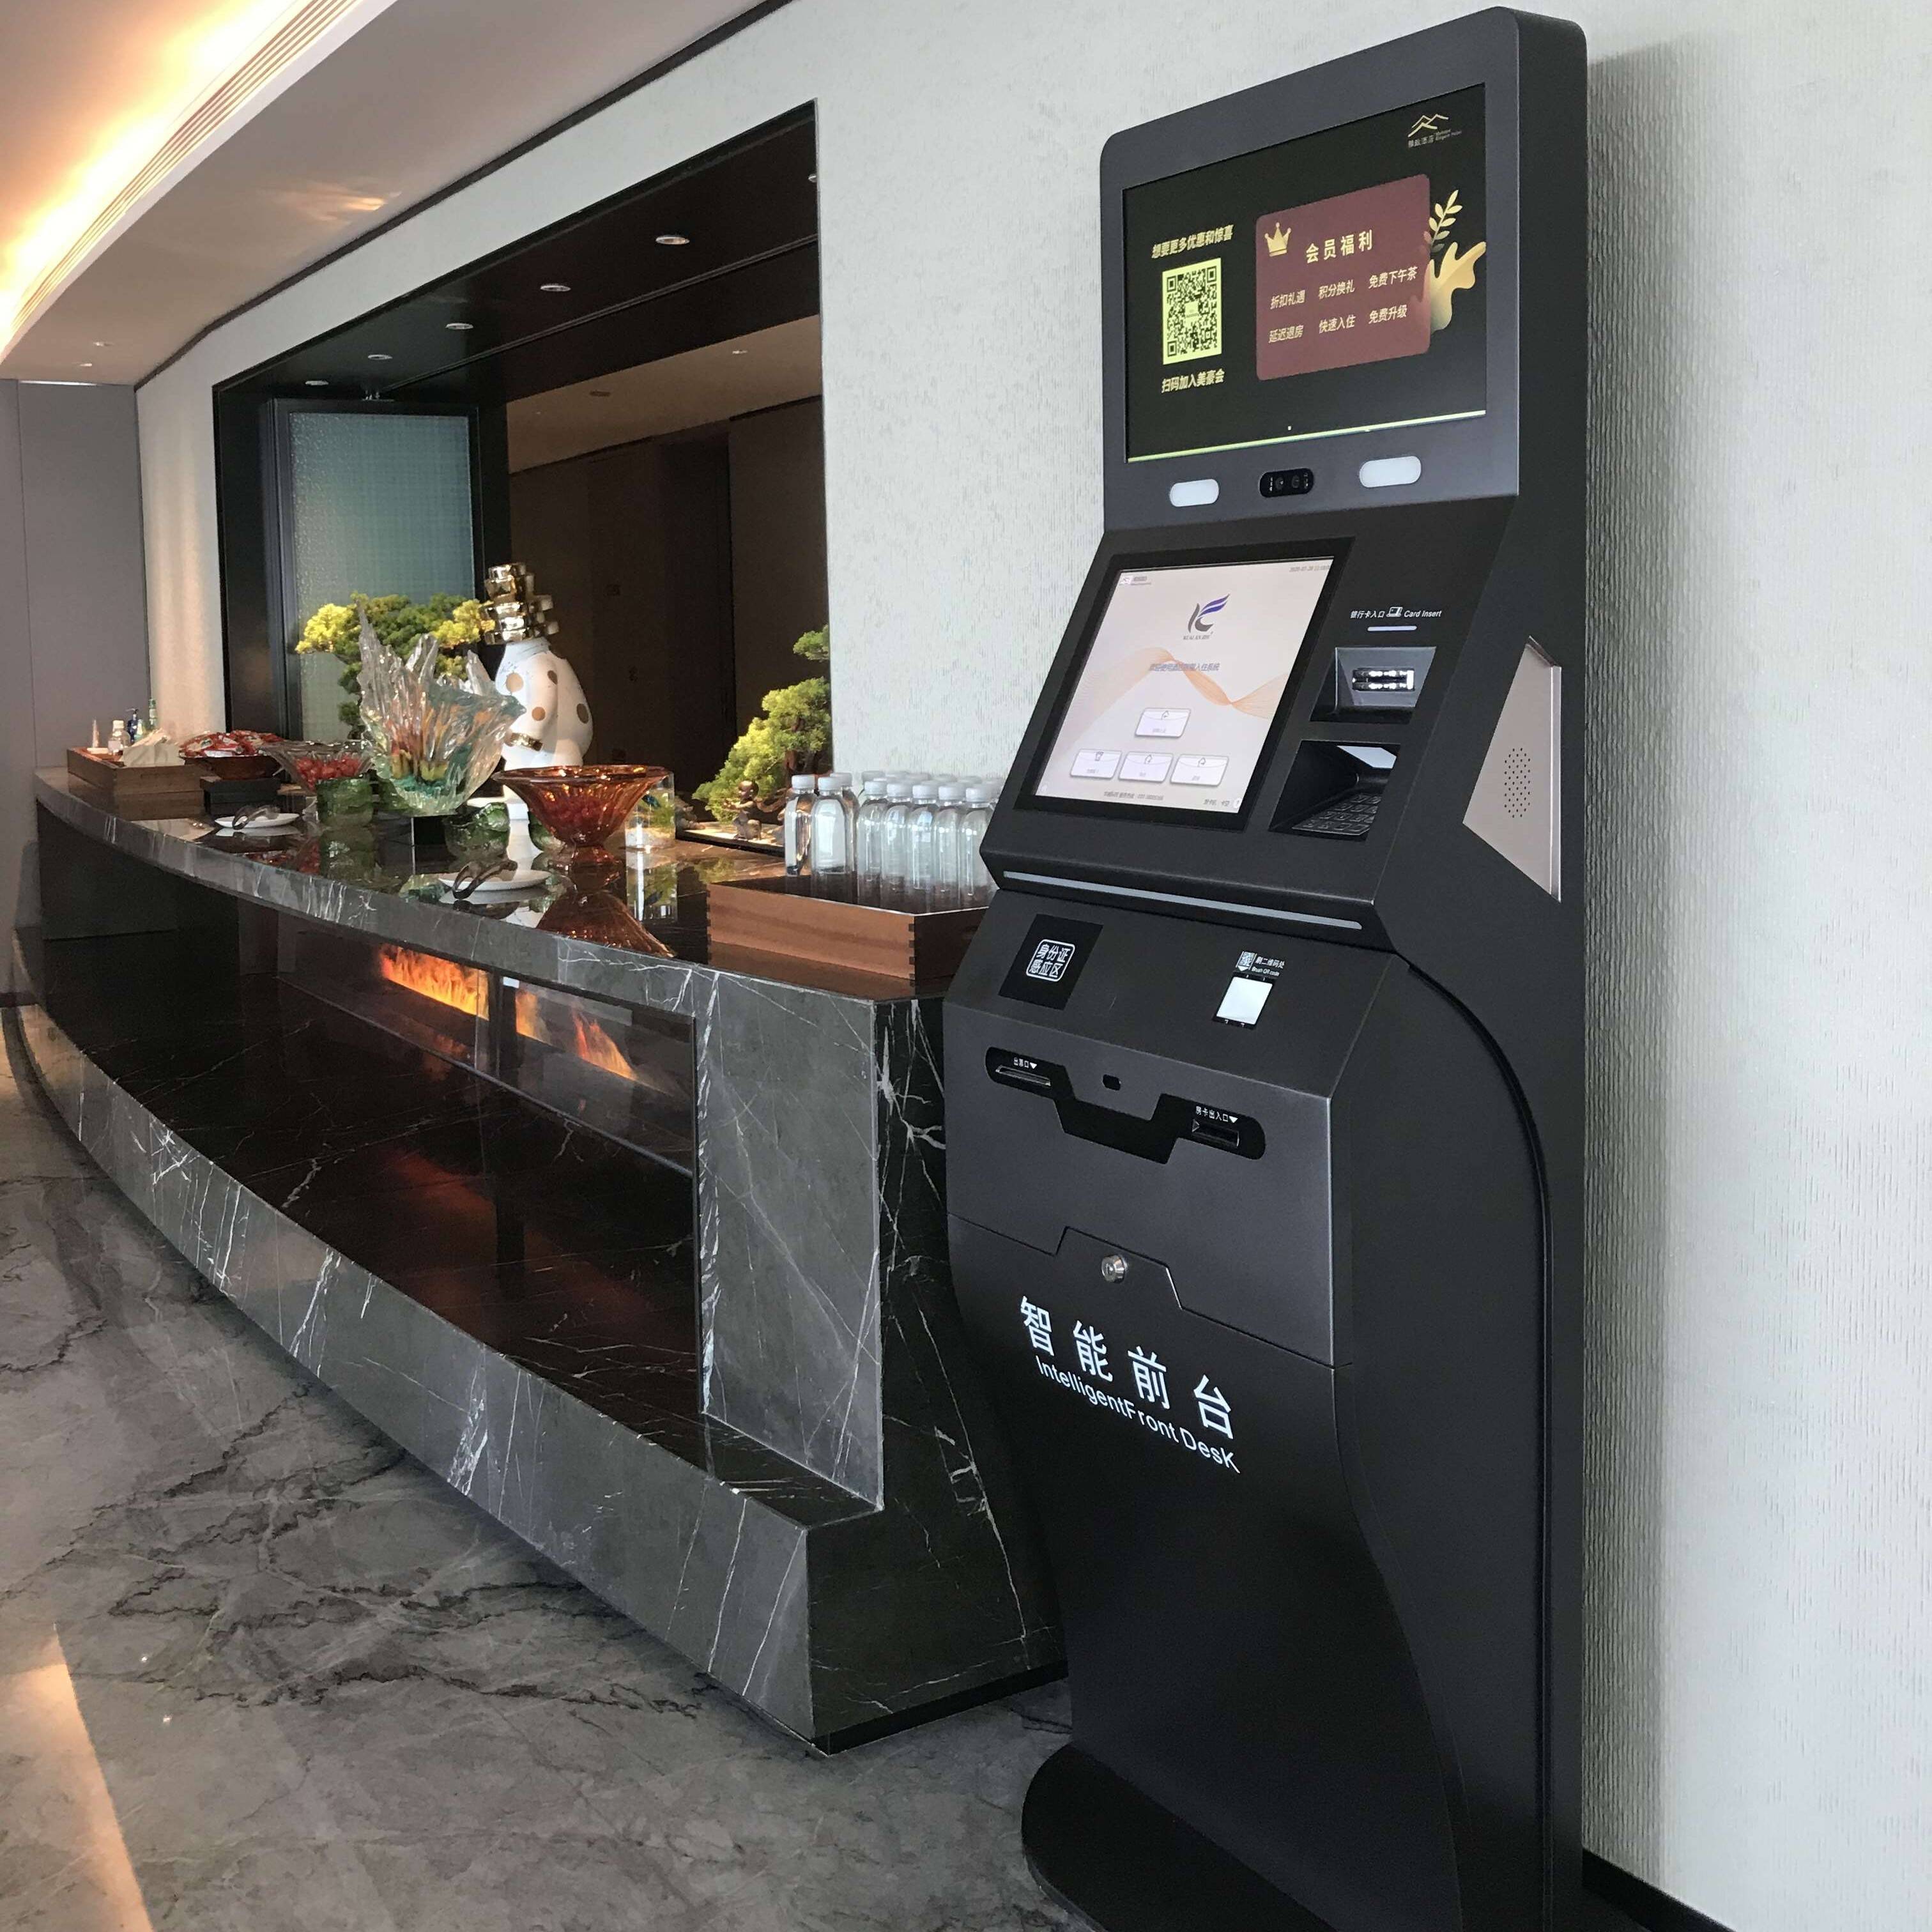 KER Hotel Check-in Kiosk Settled In Guangzhou Elegant Hotel (Zhujiang New Town Canton Tower)